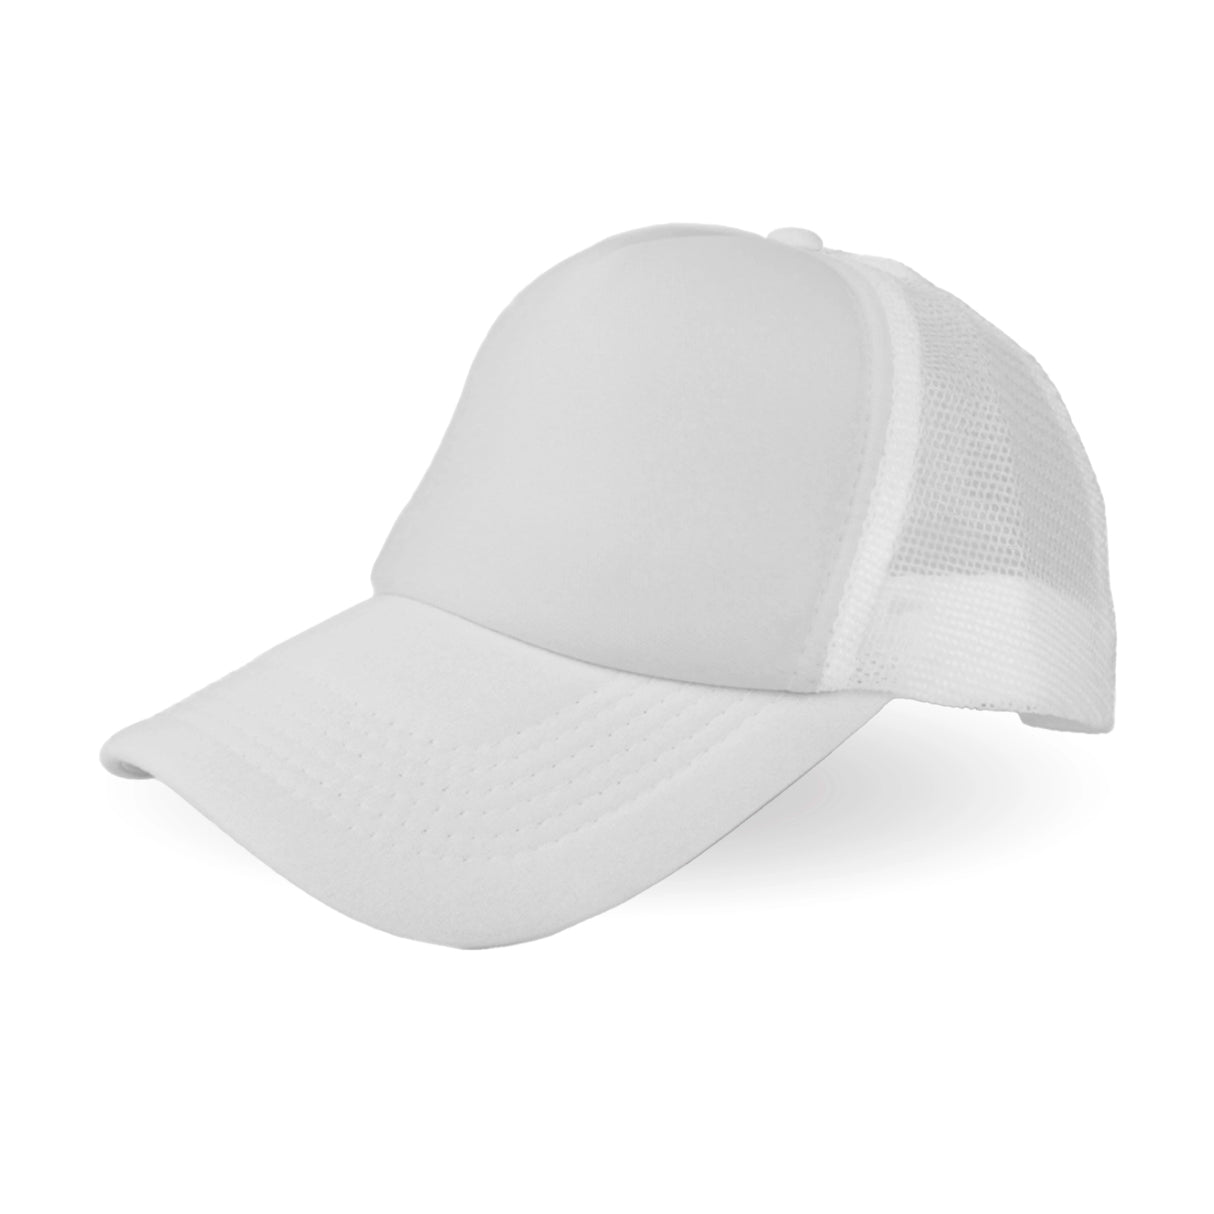 Trucker Hat - White & White